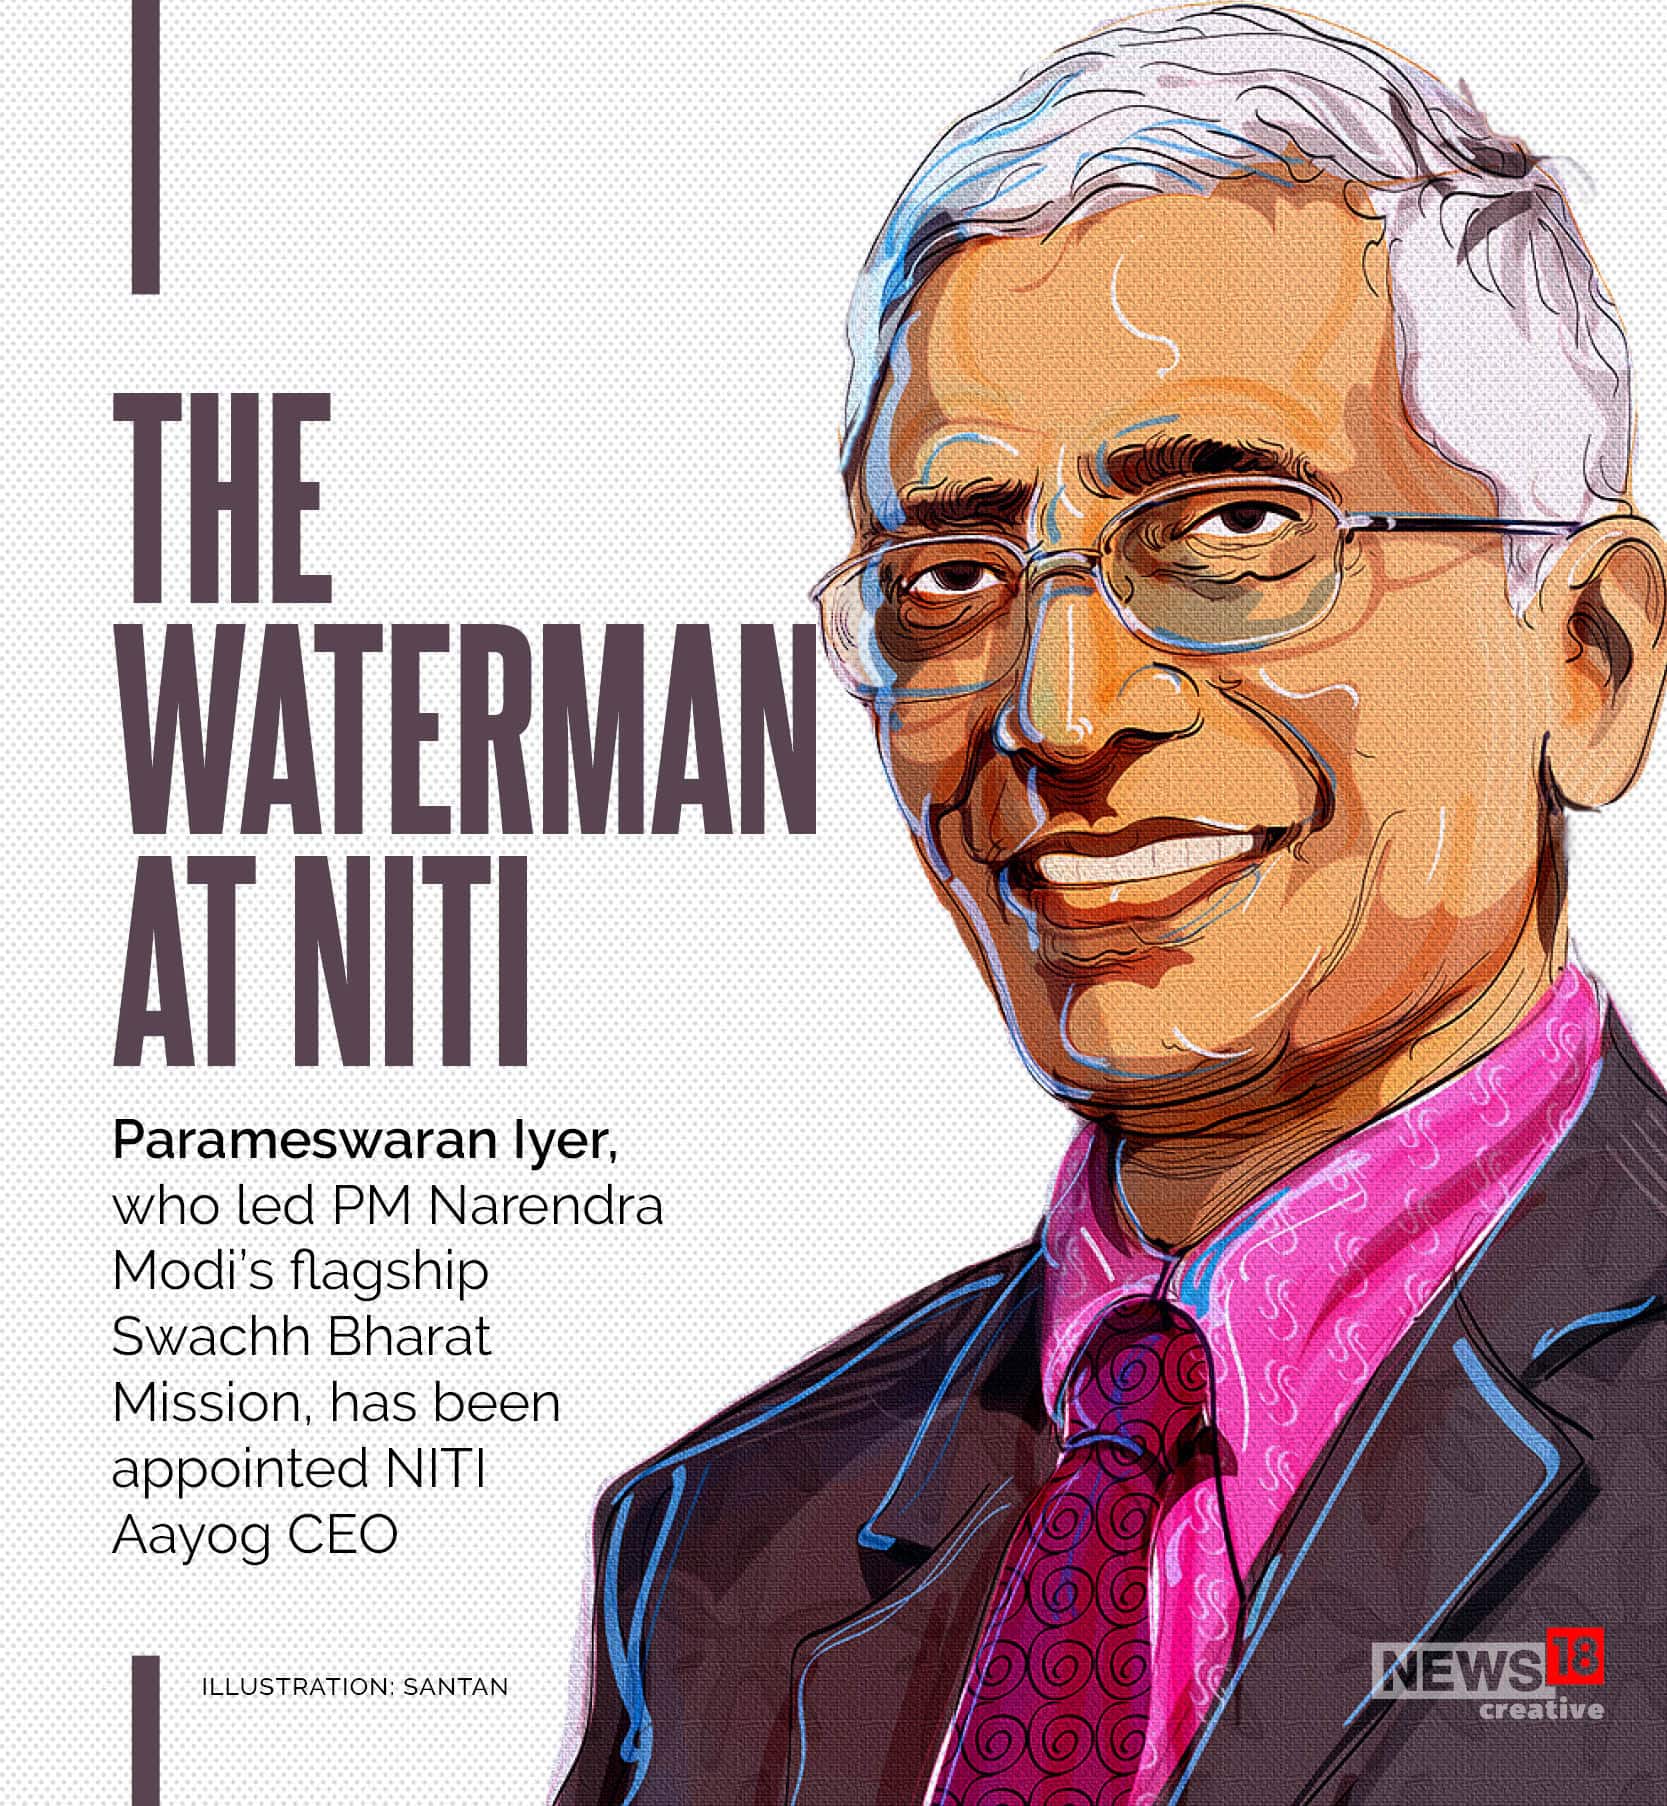 Parameswaran Iyer appointed new CEO of NITI Aayog. A look at his profile